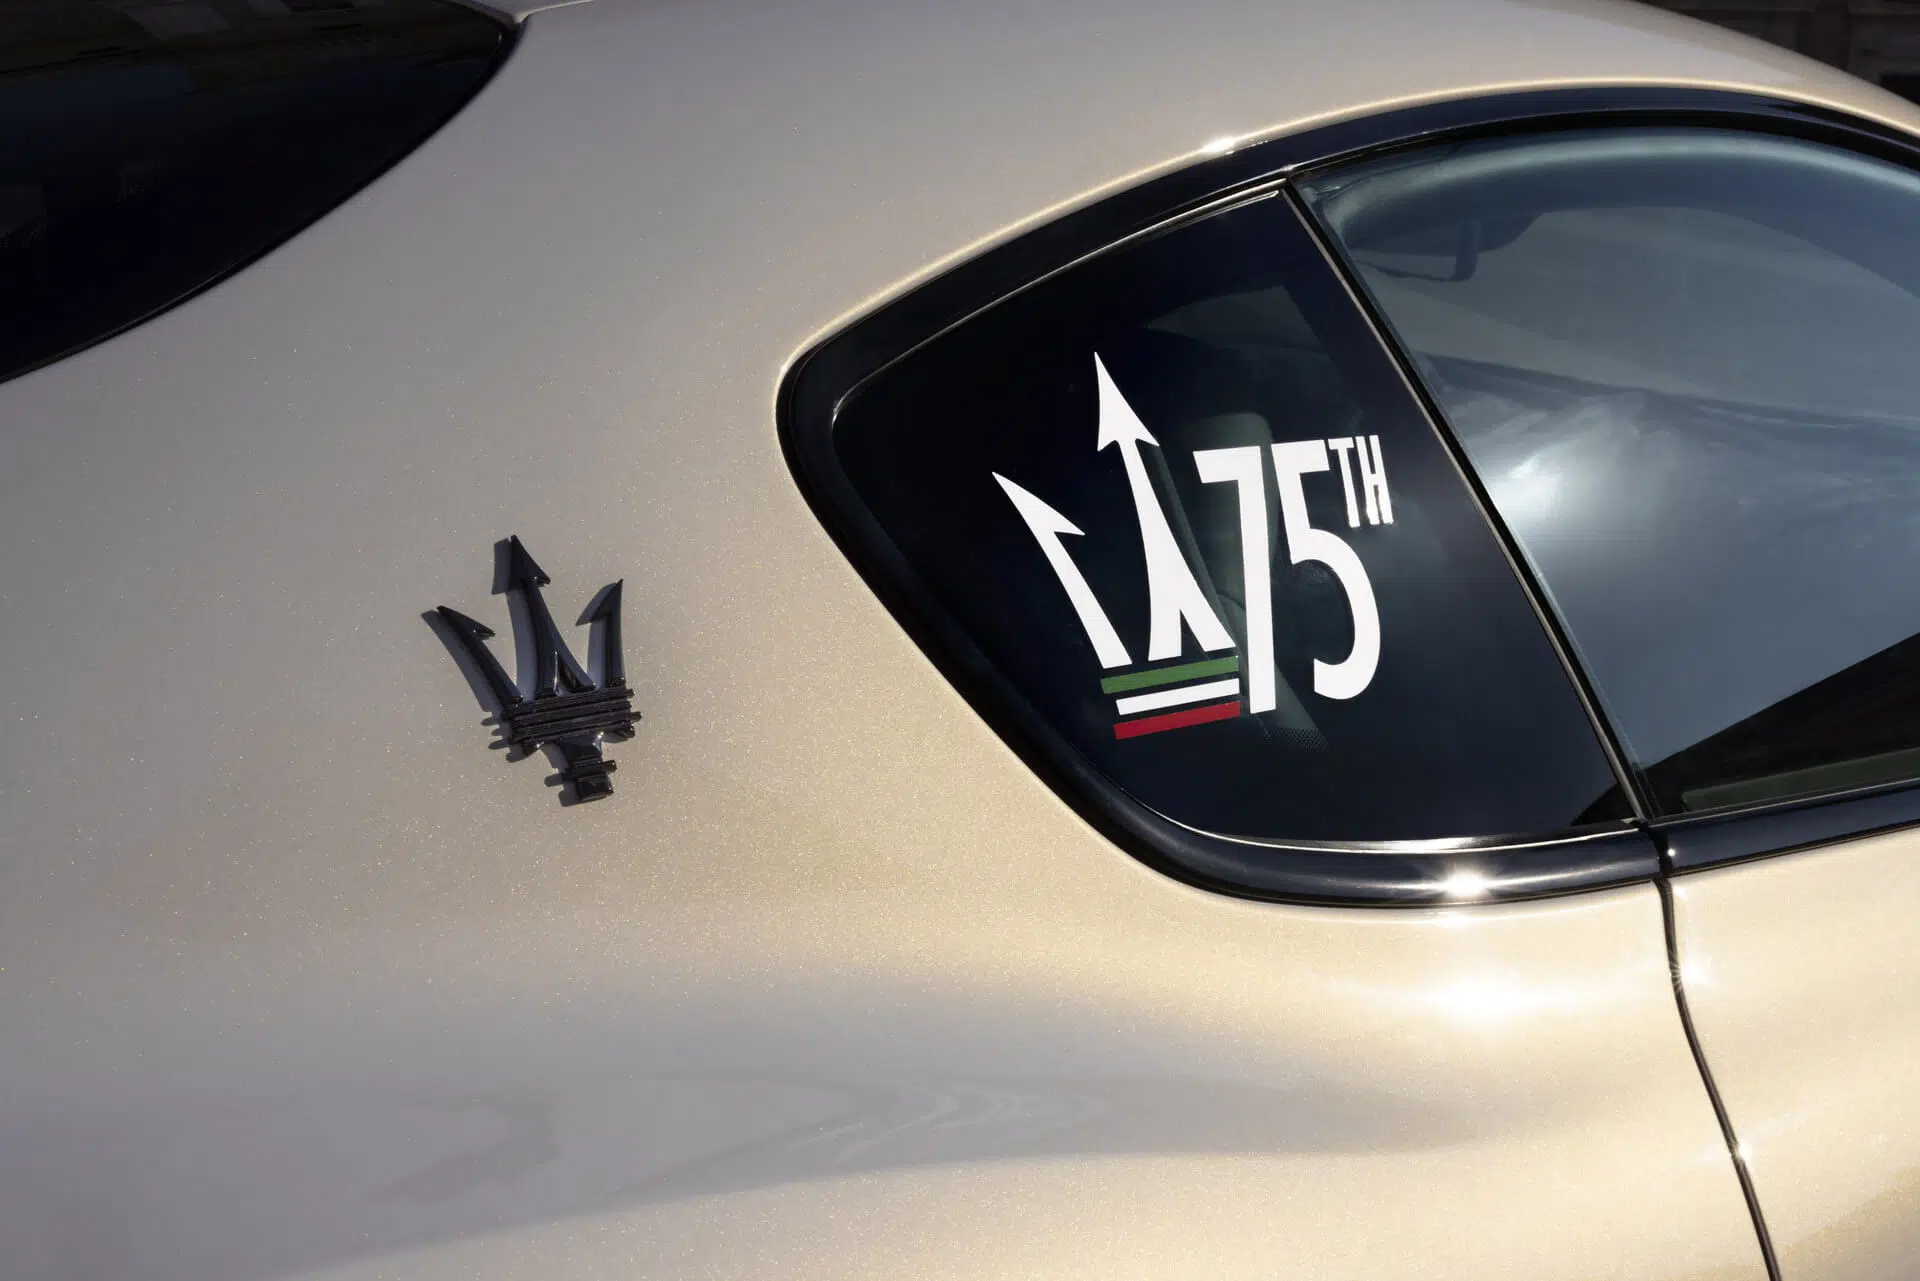 Maserati GranTurismo pormenor autocolante 75 anos